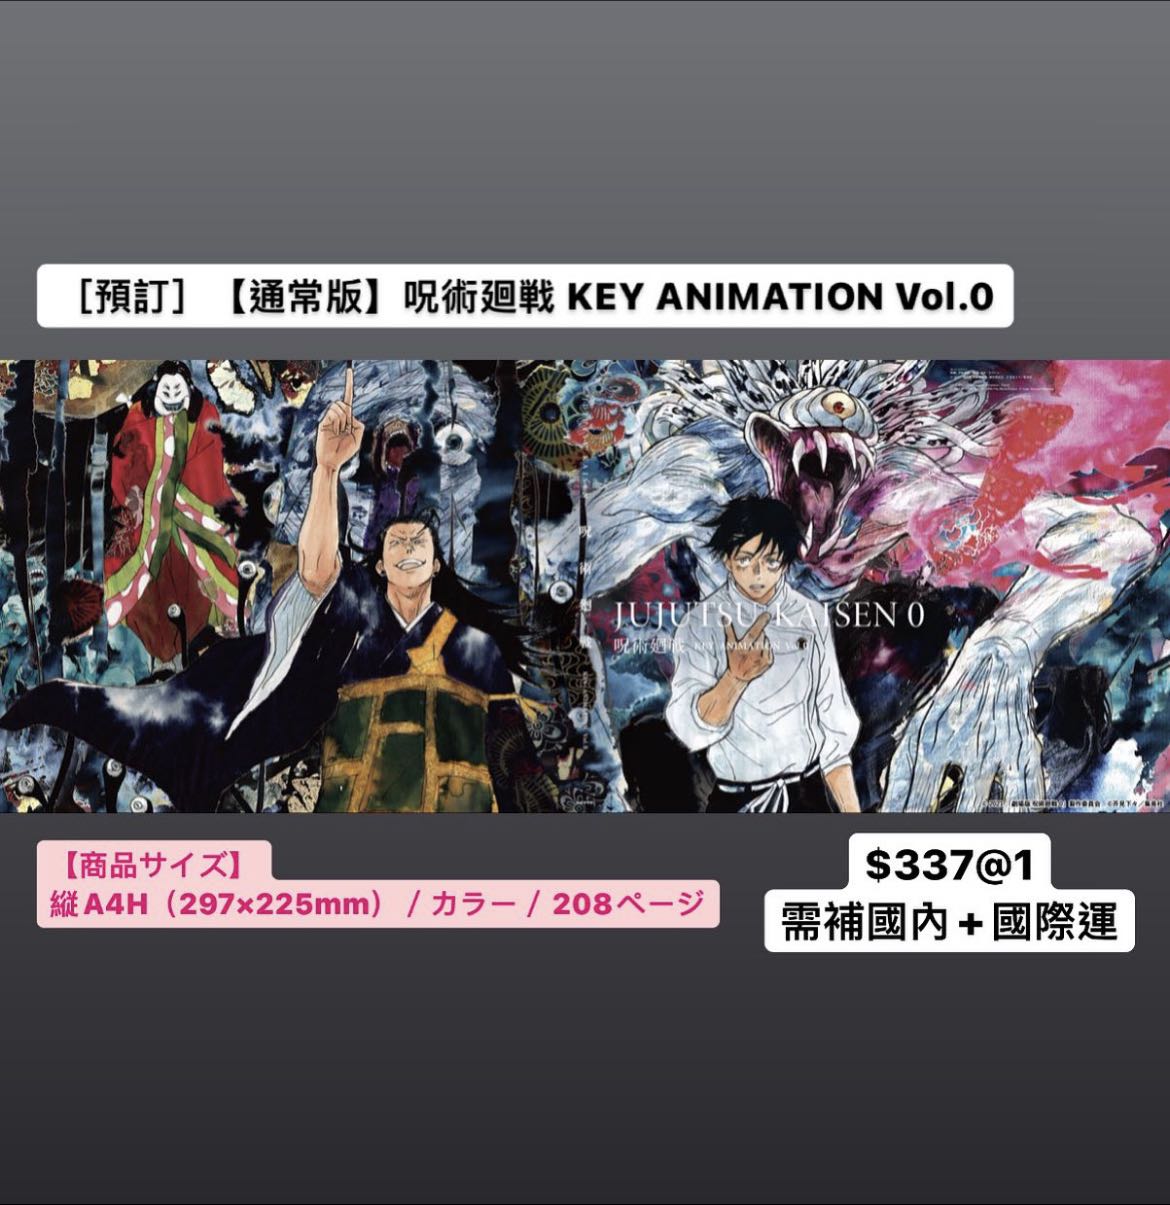 ［預訂］【通常版】呪術廻戦KEY ANIMATION Vol.0, 興趣及遊戲, 書